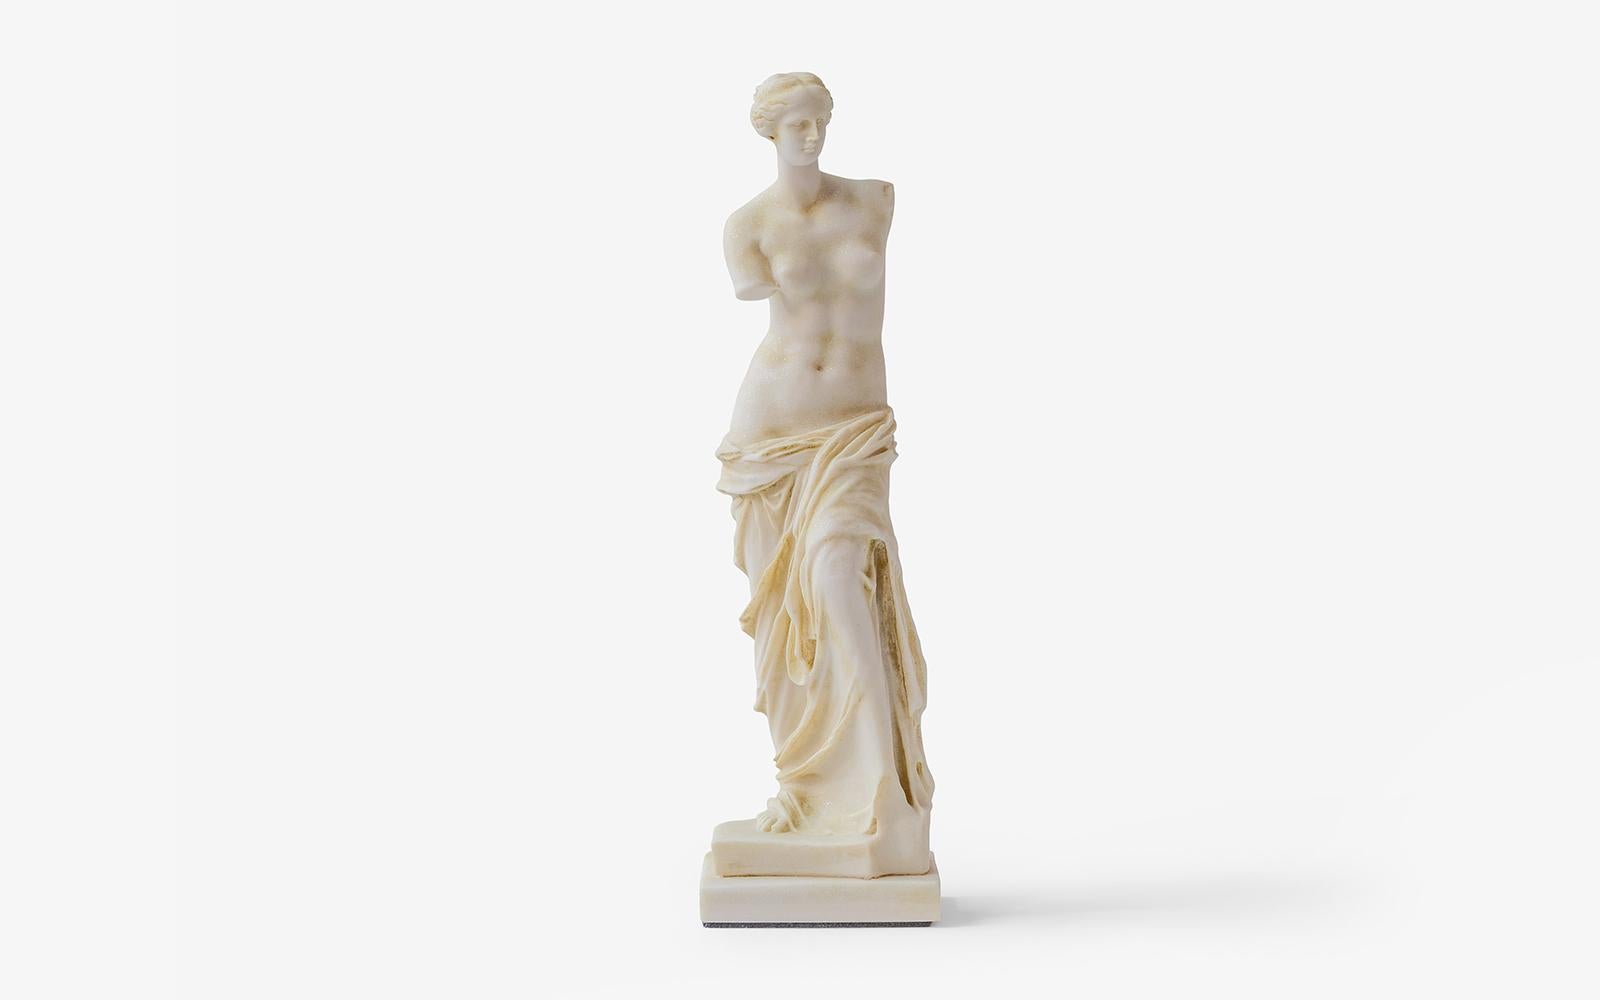 Turkish Venus De Milo Statue Made with Compressed Marble Powder 'Louvre Museum'